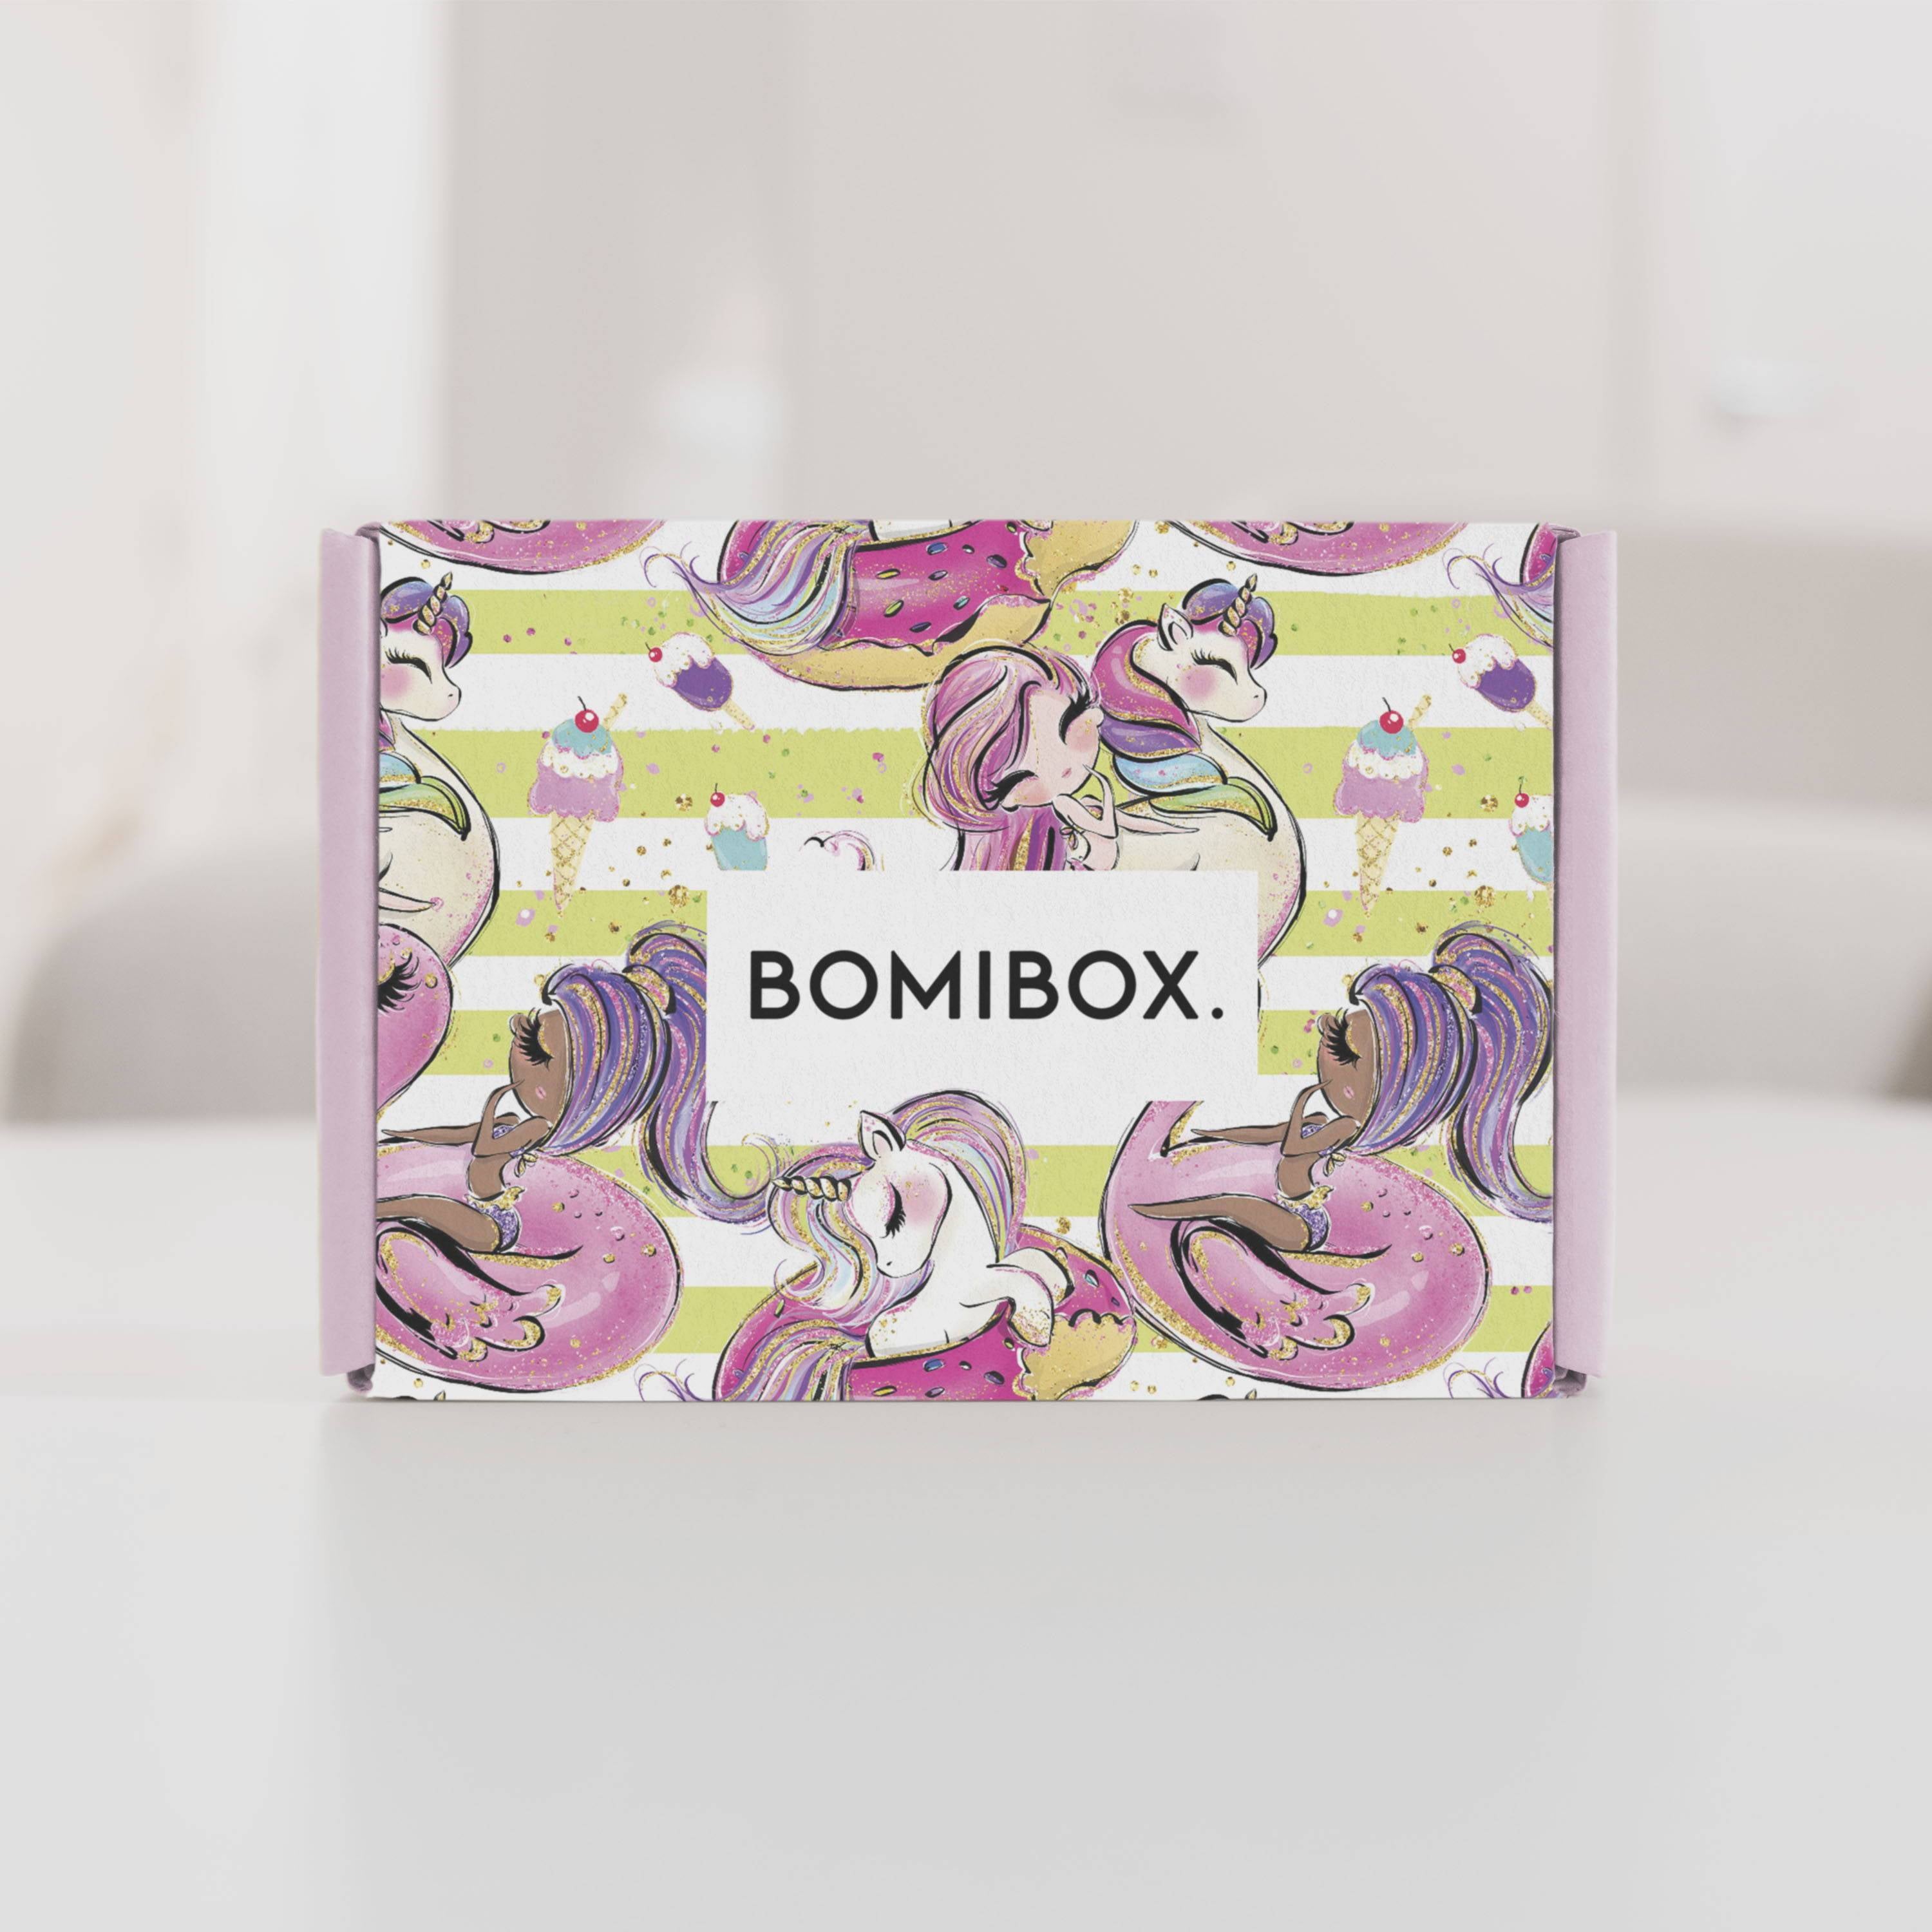 Past Boxes-Bomibox June 2020 - Korean Beauty Box Monthly Korean Skincare Subscription